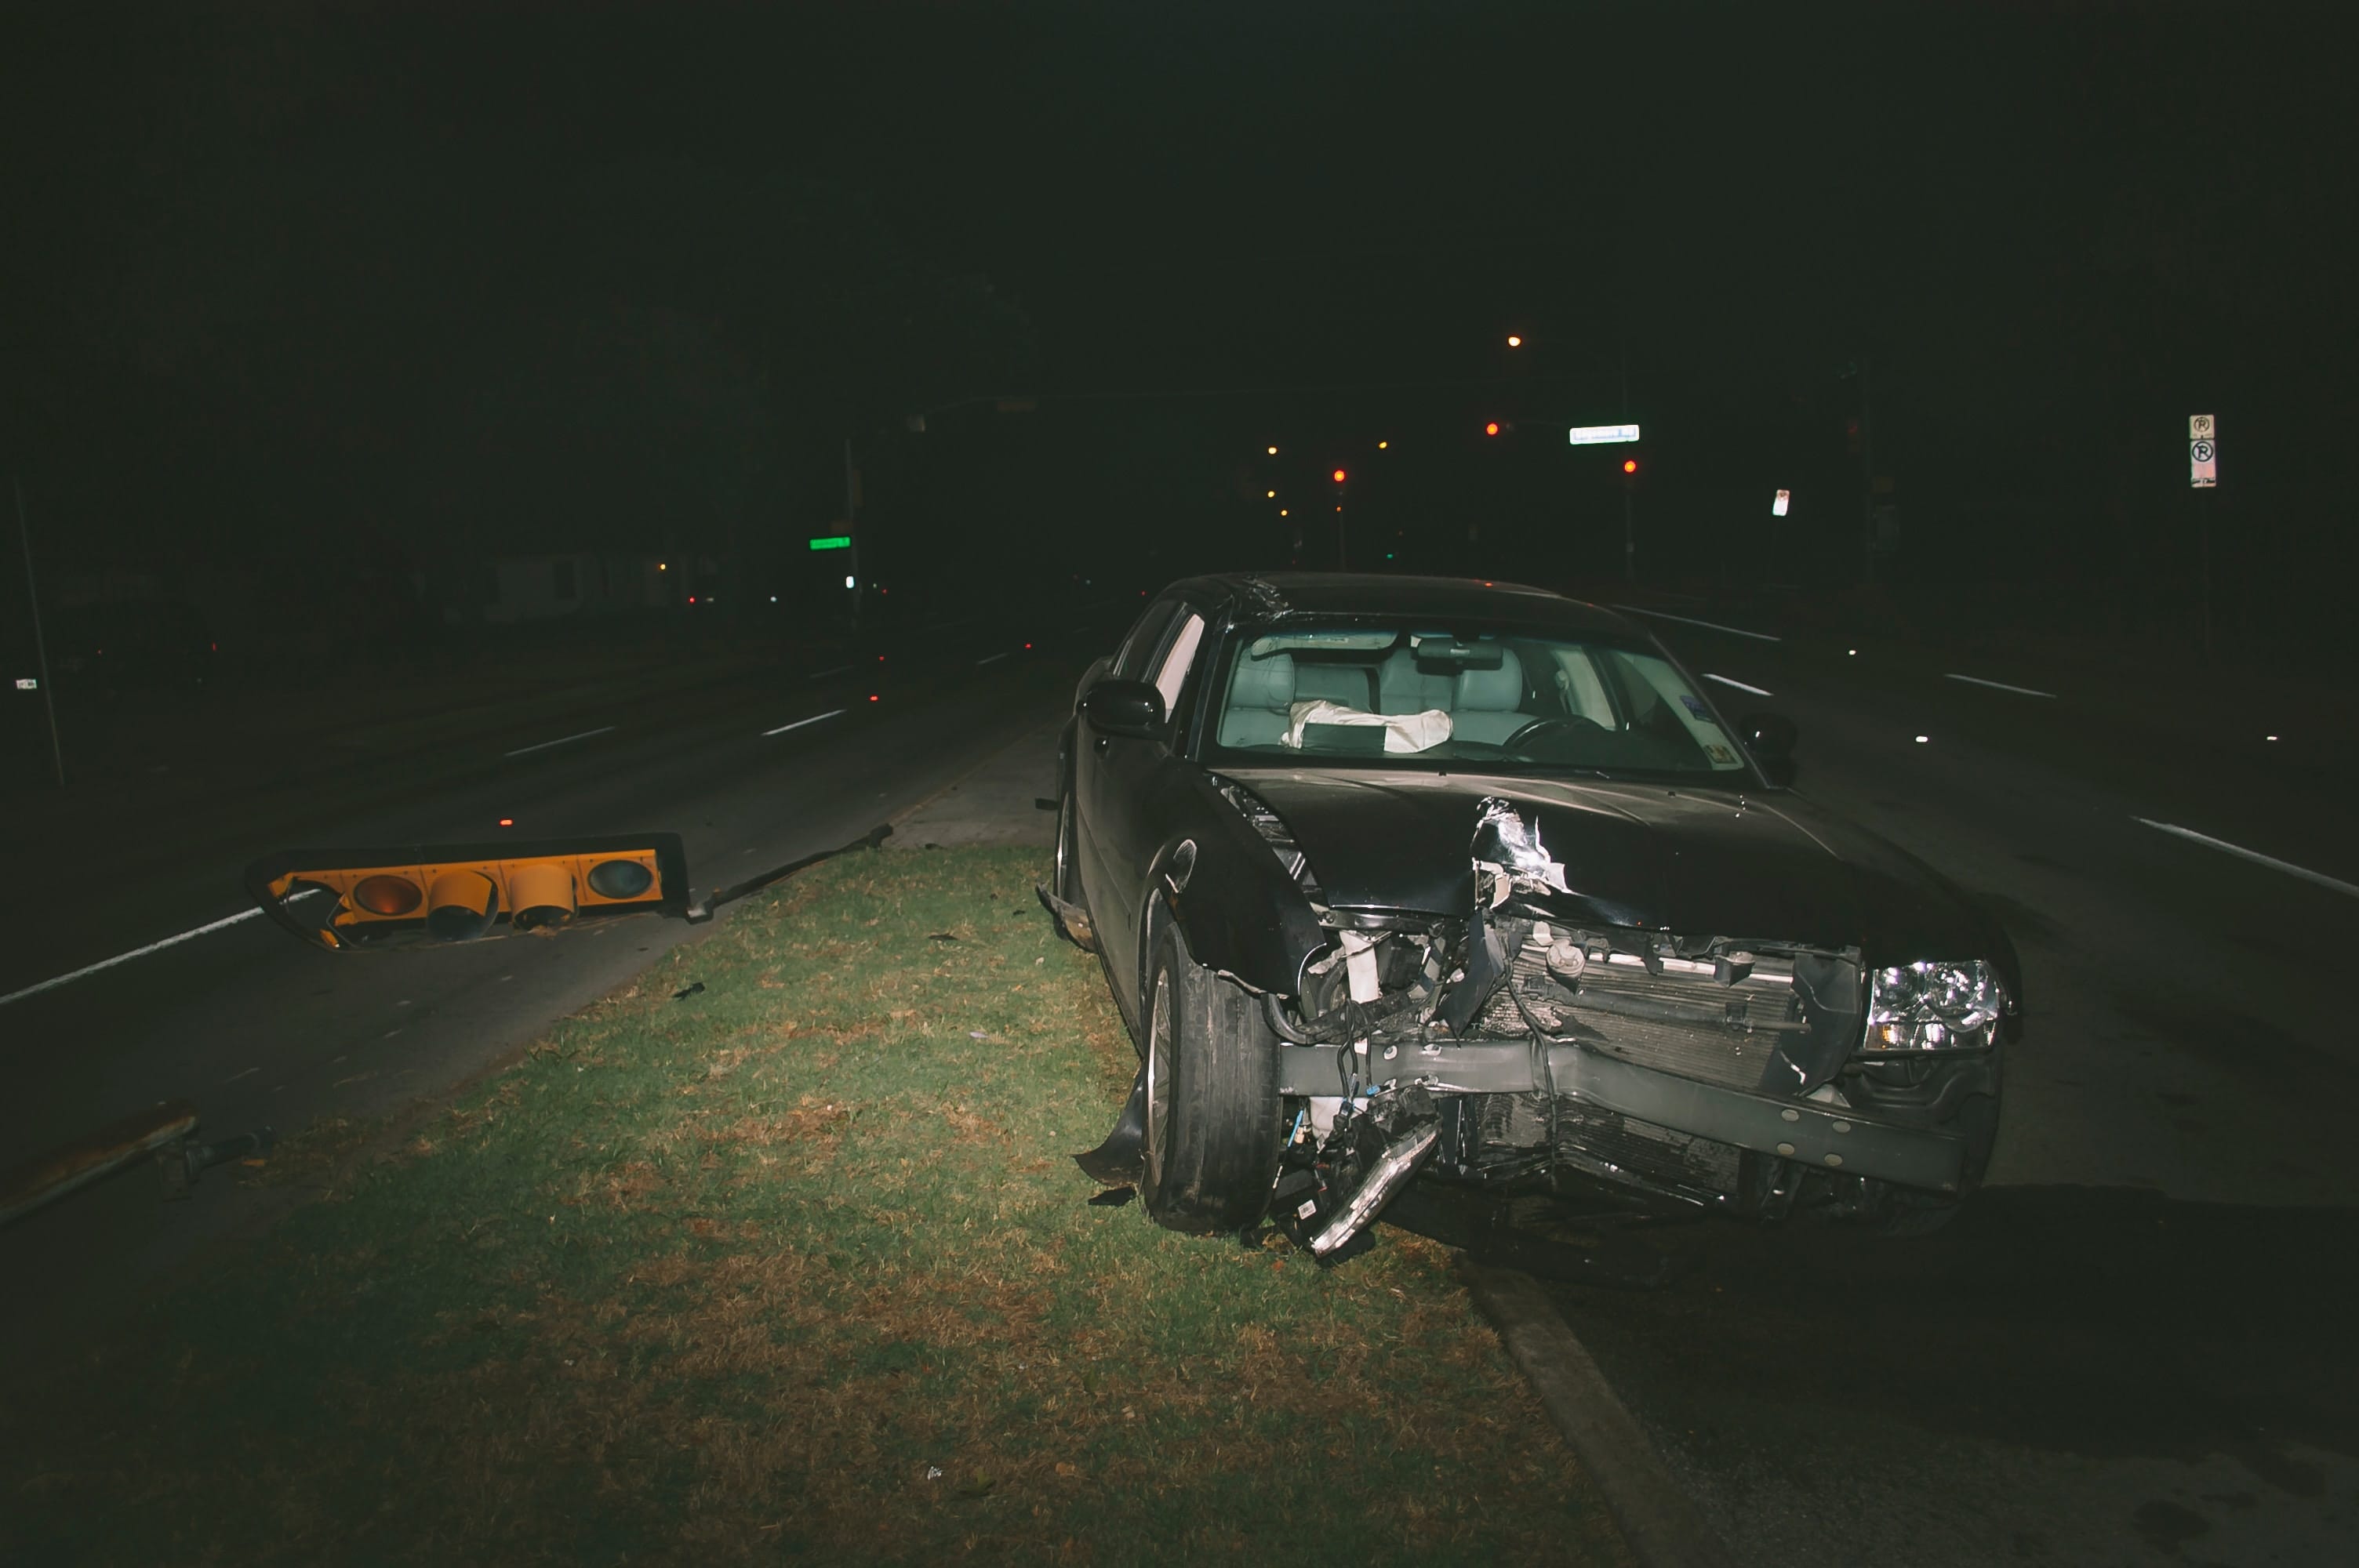 Car accident at night showing a badly damaged car; image by Matthew T. Rader, via Unsplash.com.